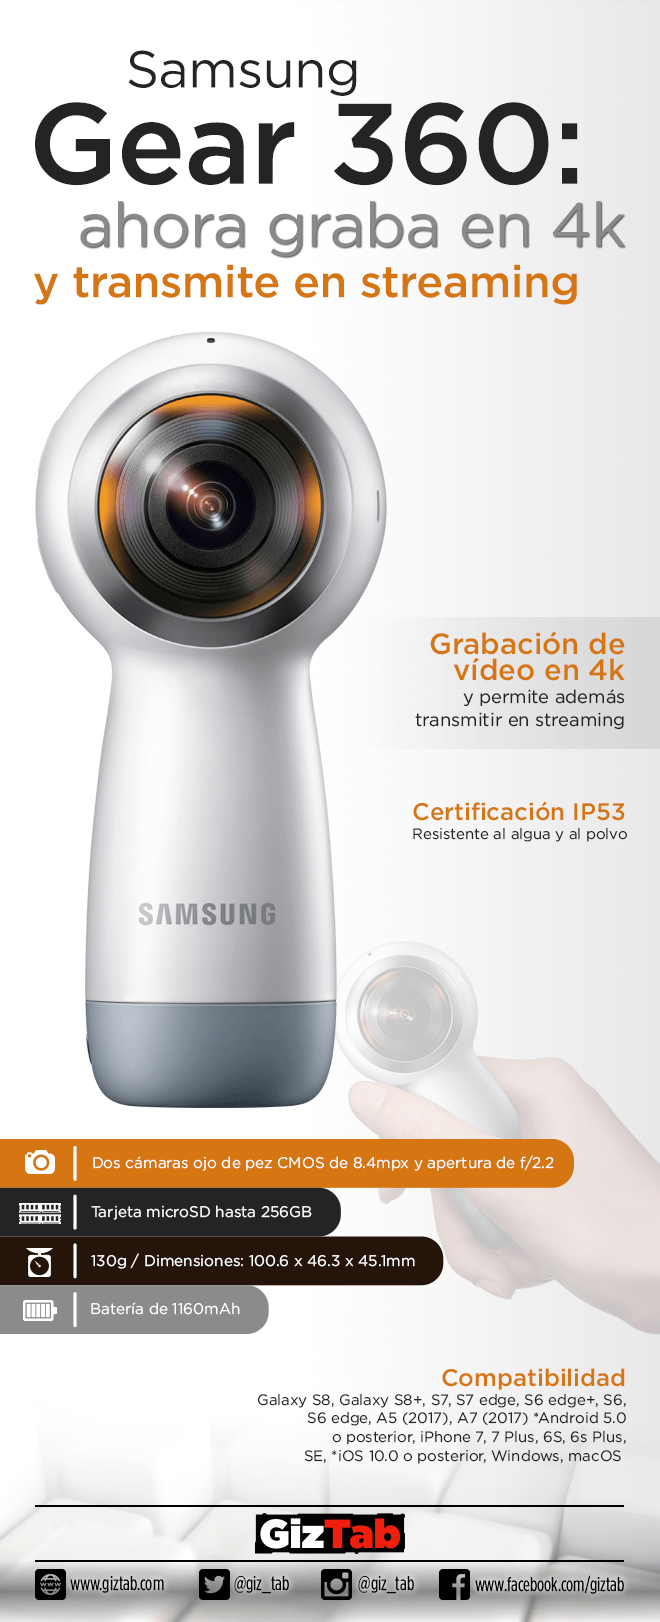 Samsung Gear 360 infographic